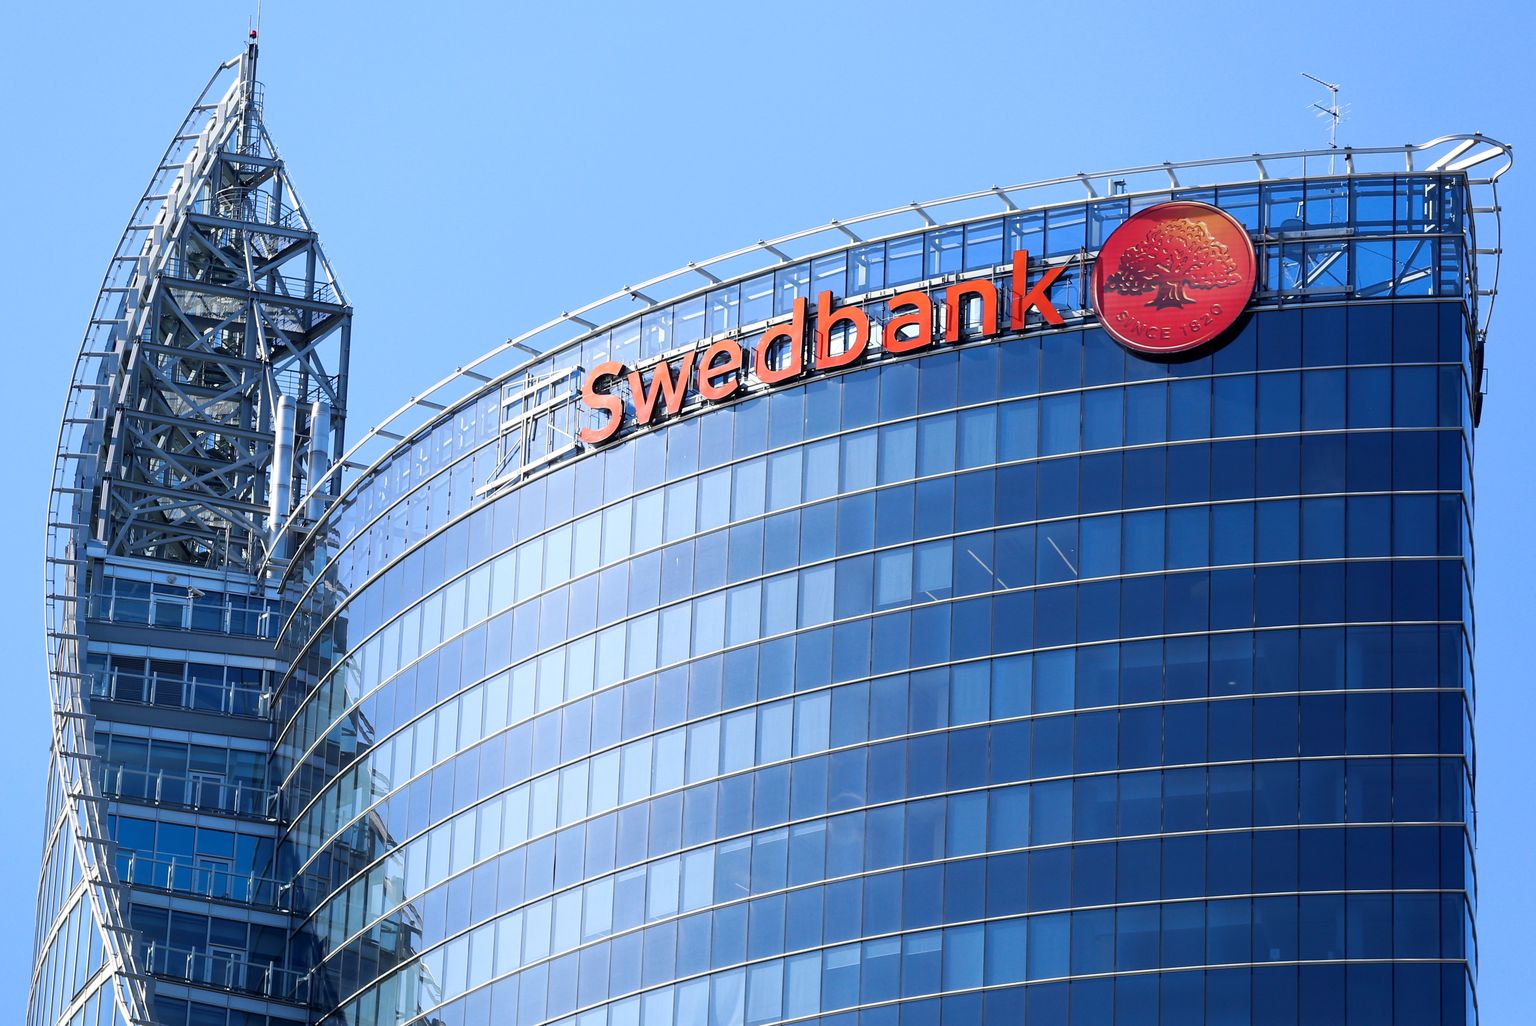 "Swedbank".